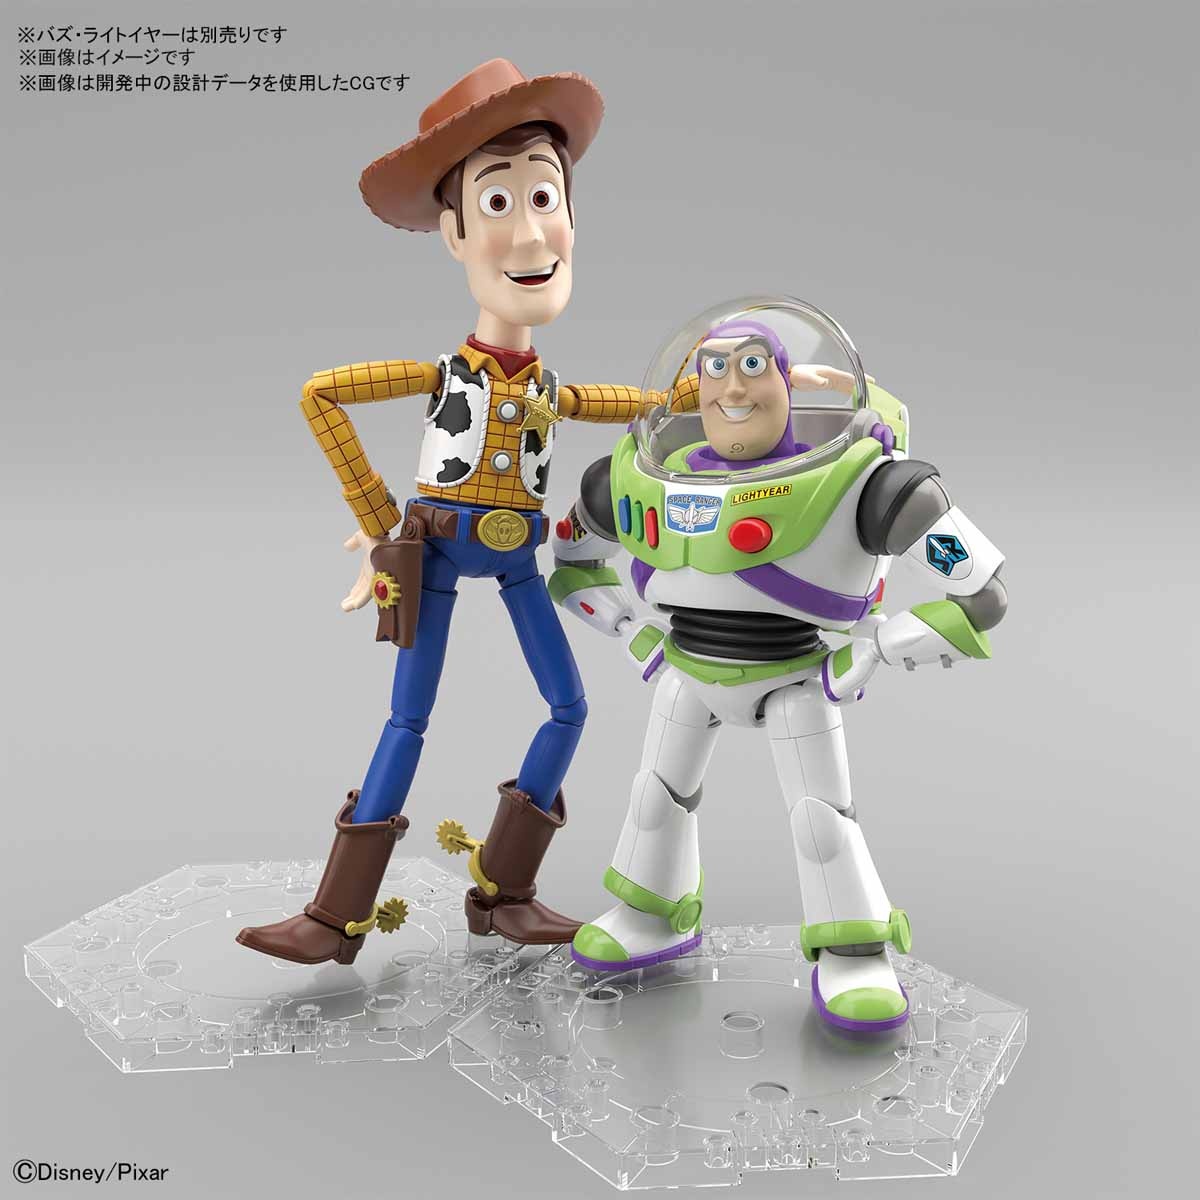 Bandai Hobby Cinema-Rise Standard Sheriff Woody Toy Story 